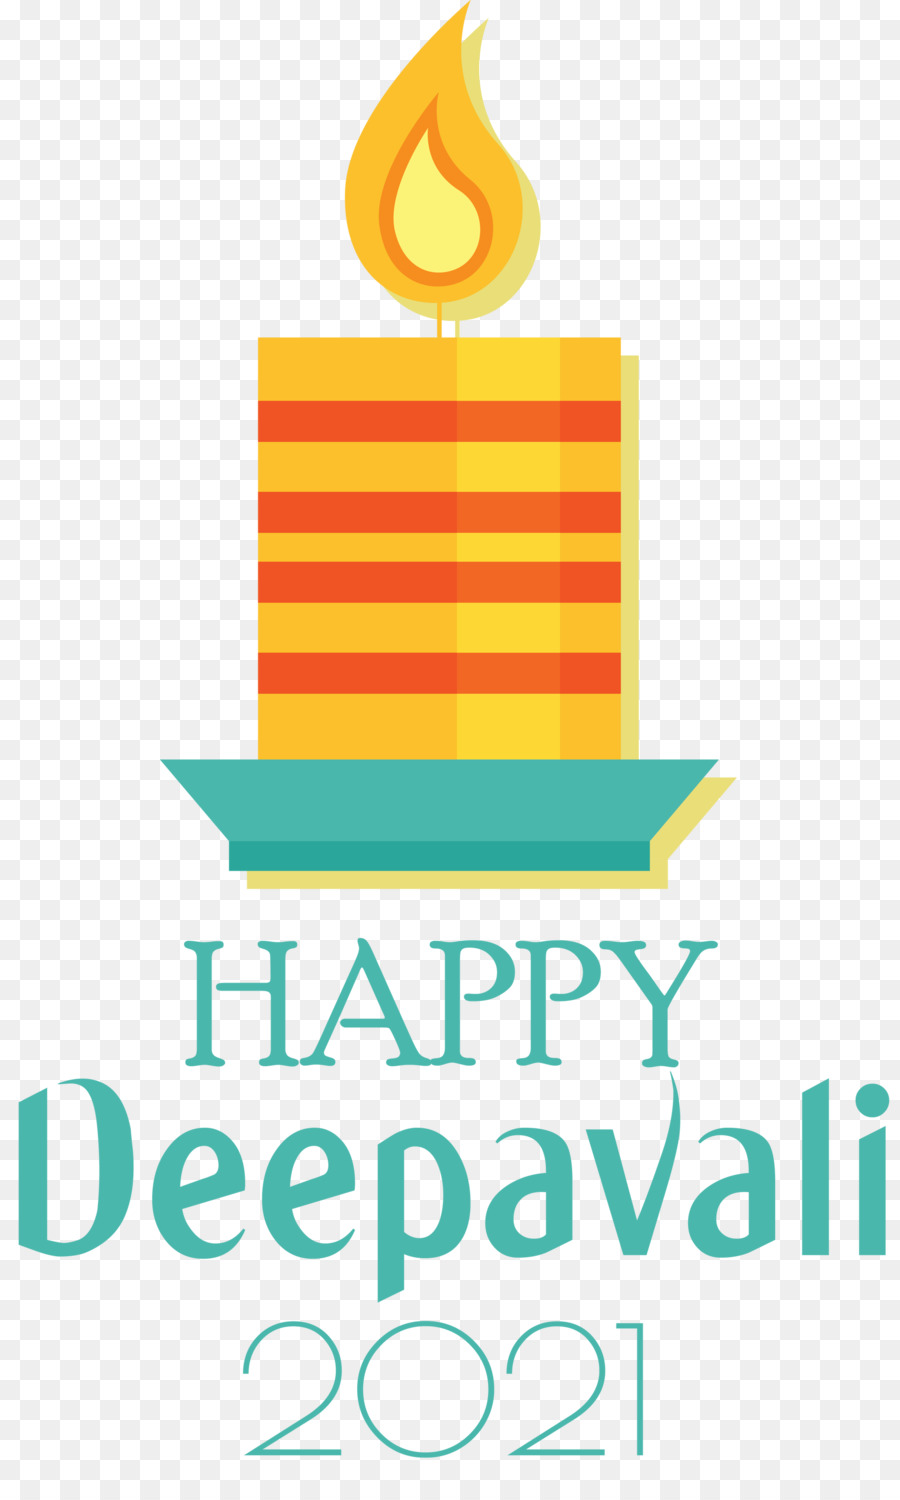 Deepawali Diwali. - 